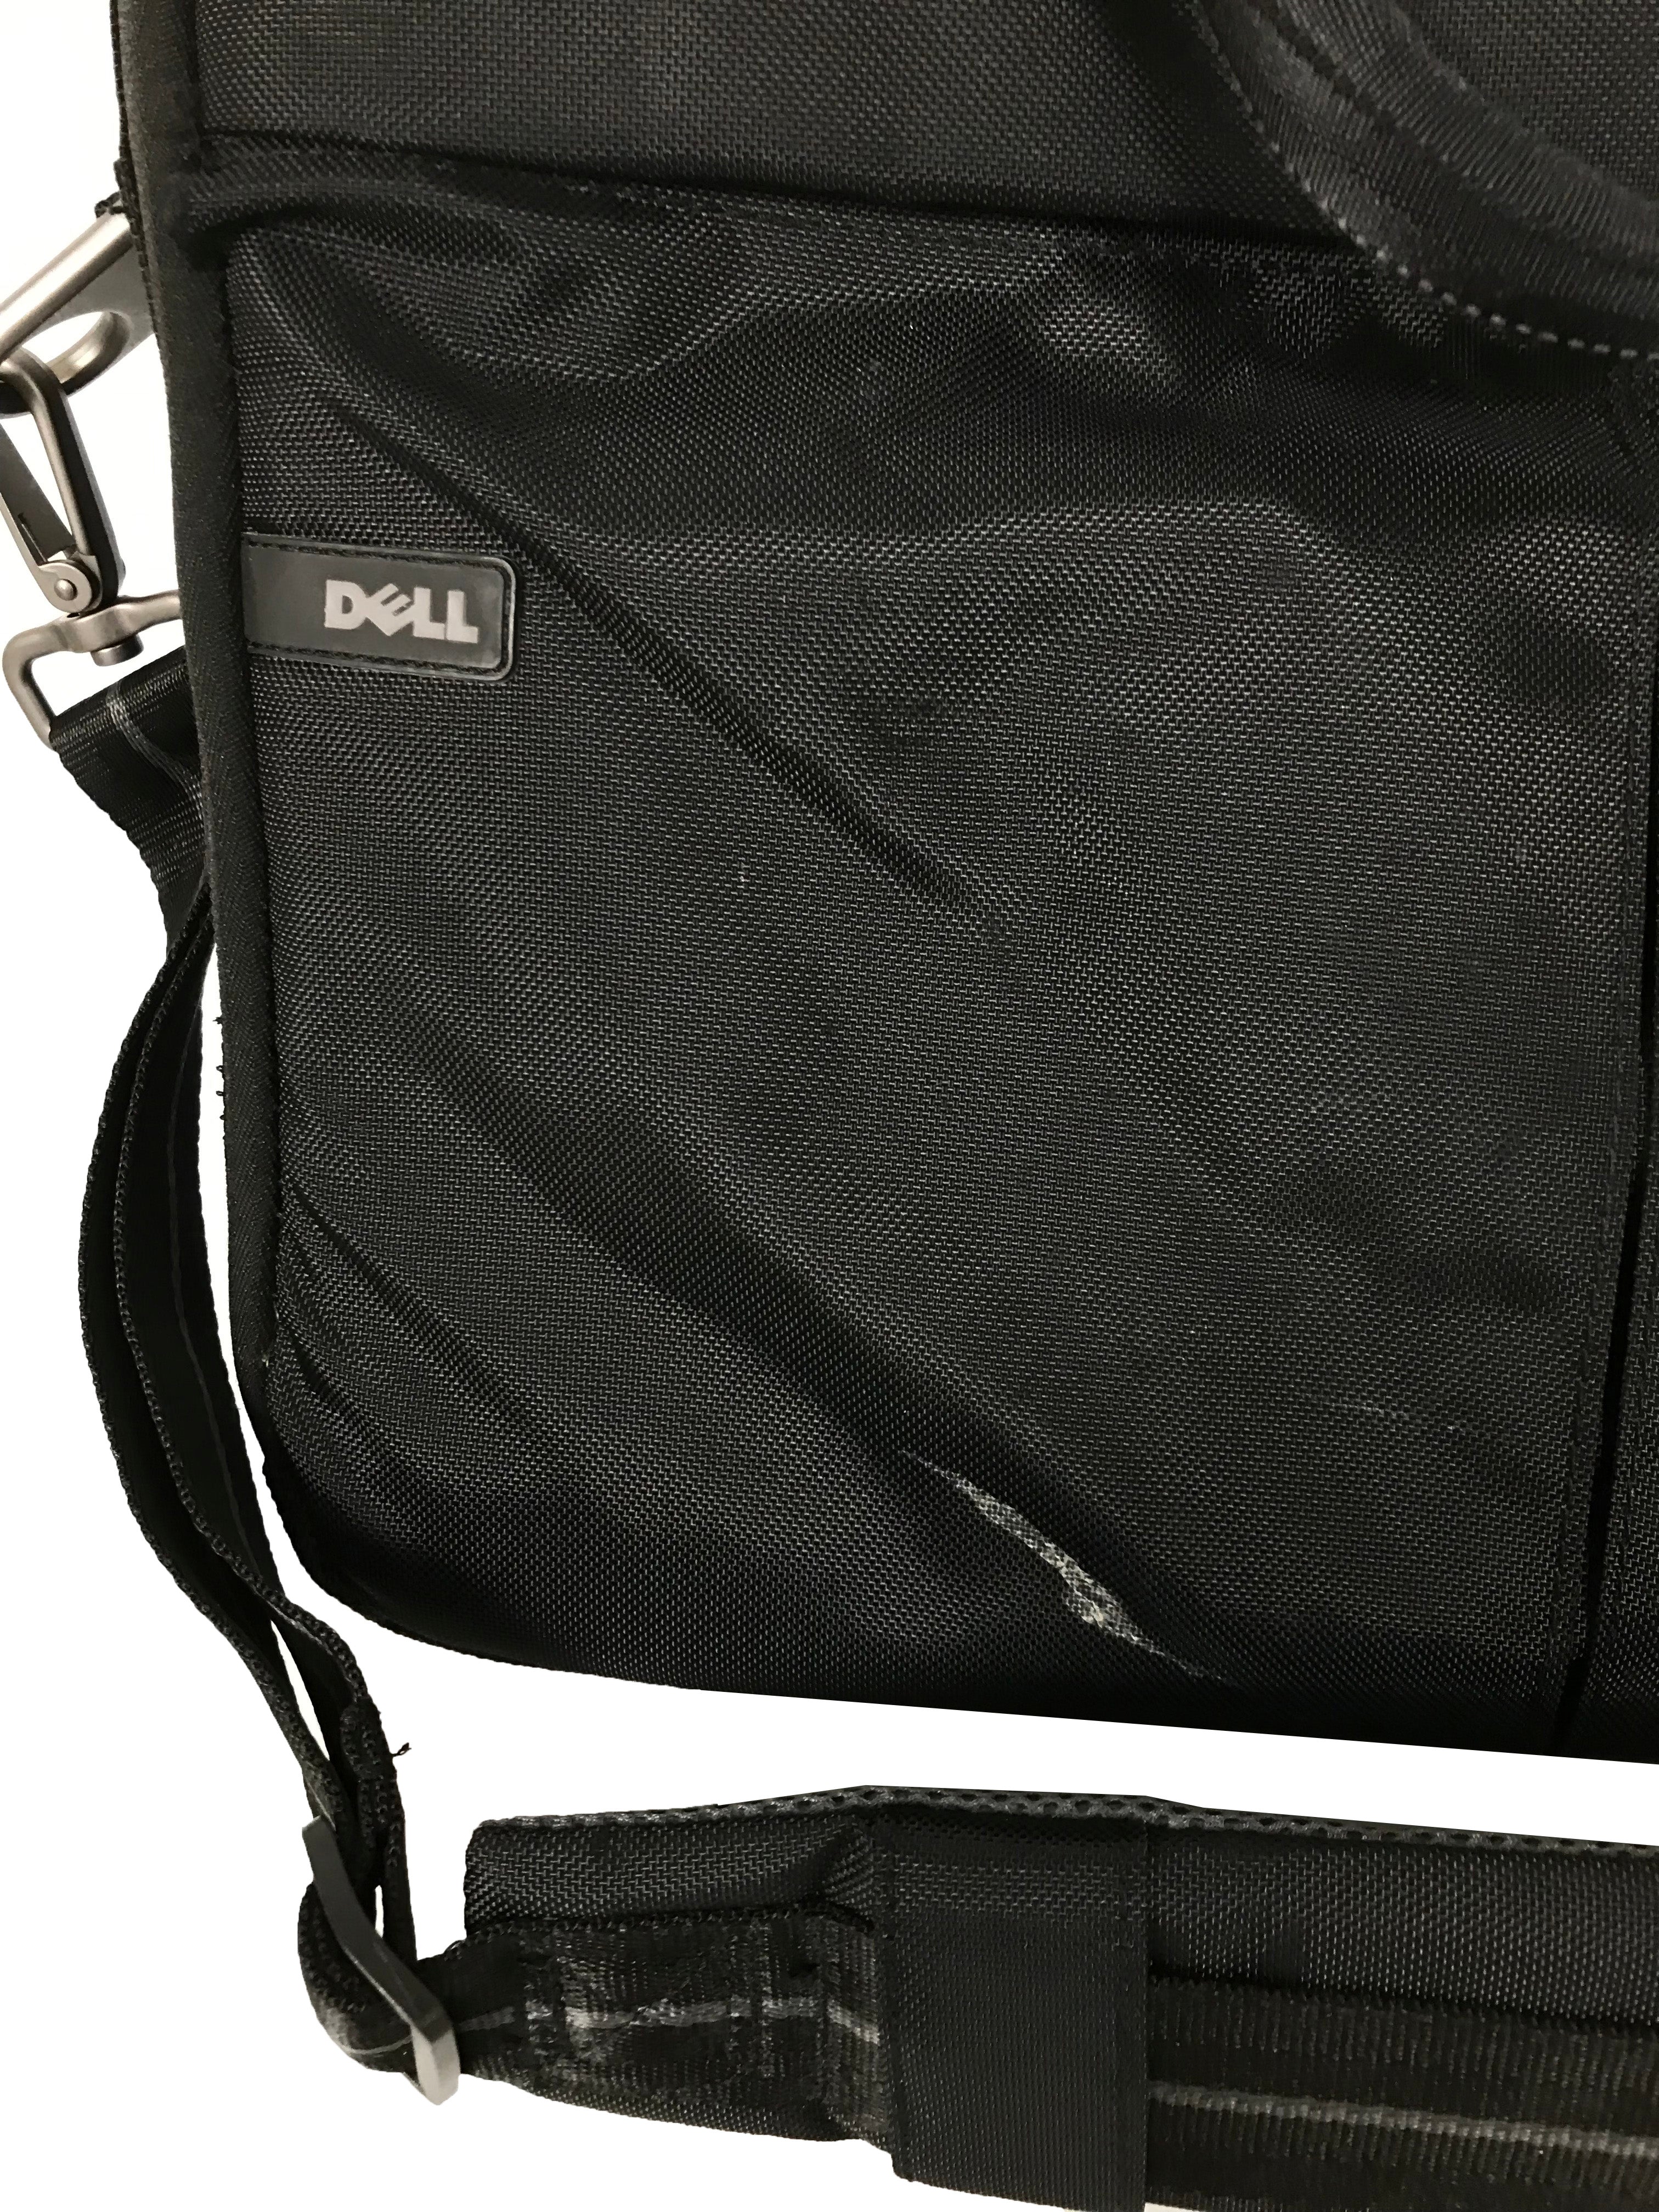 Dell Black Laptop Messenger Bag